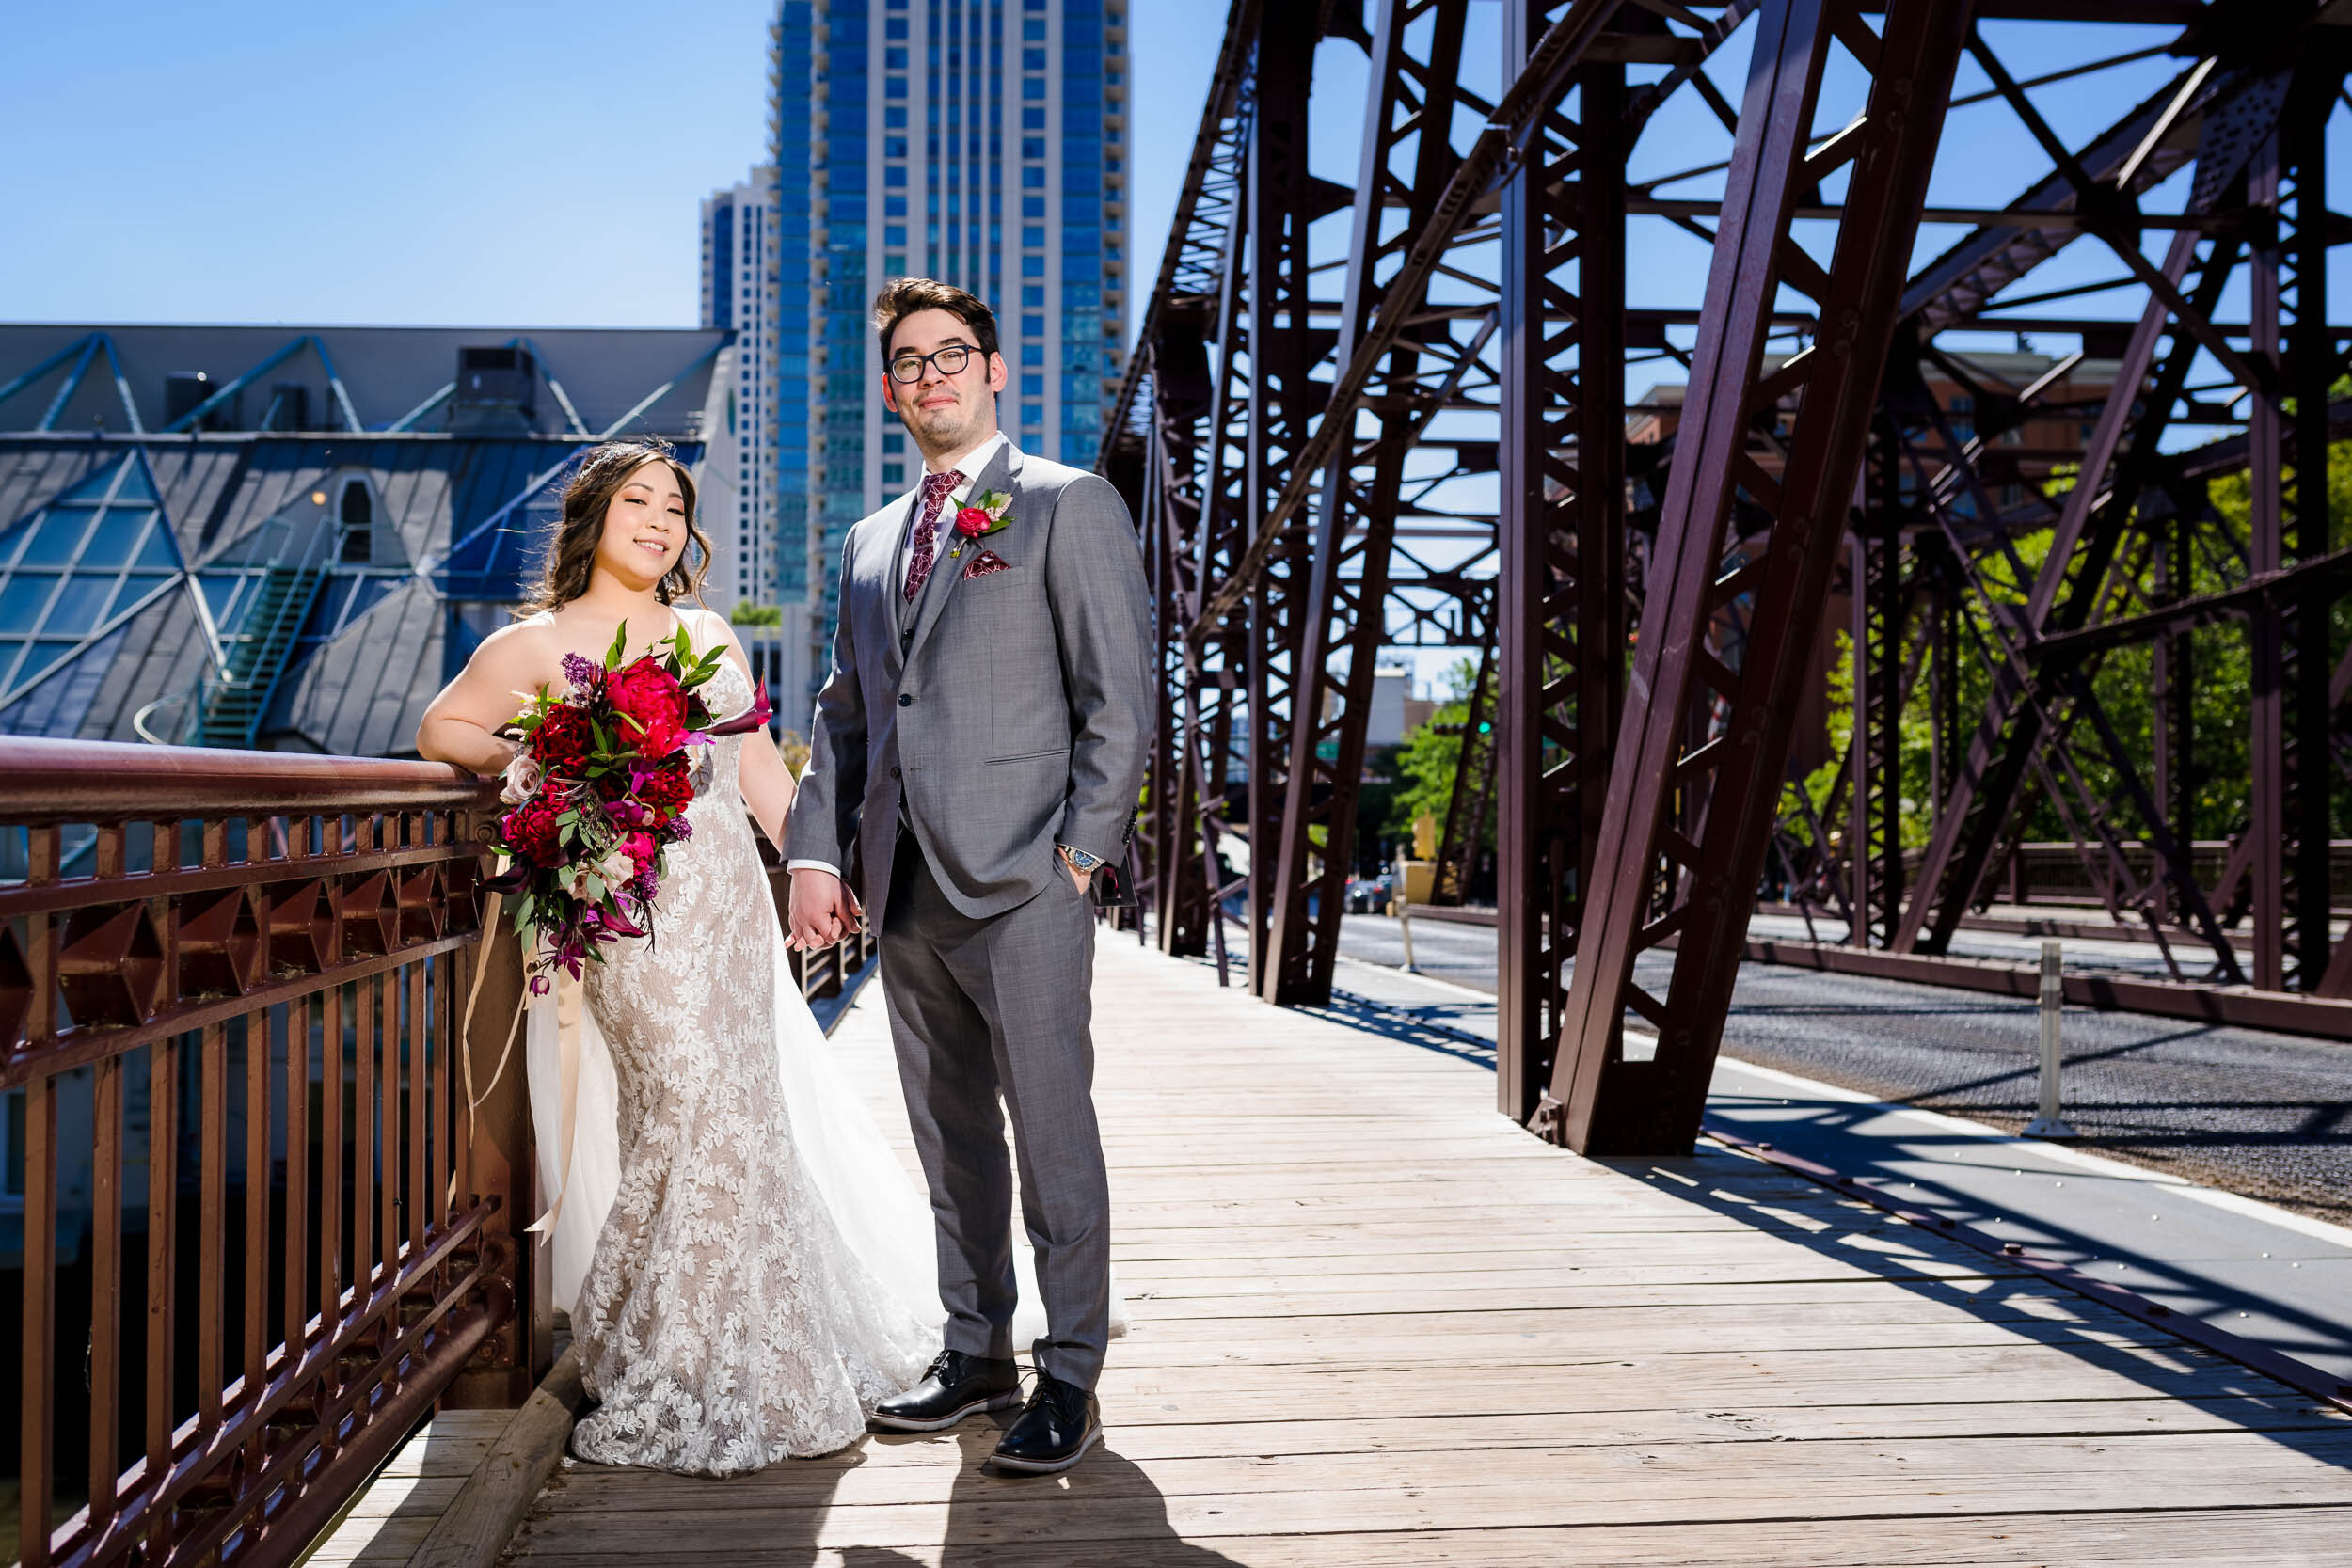 Chicago Wedding Photographer | Kinzie Street Bridge | J. Brown Photography | creative wedding portraits.